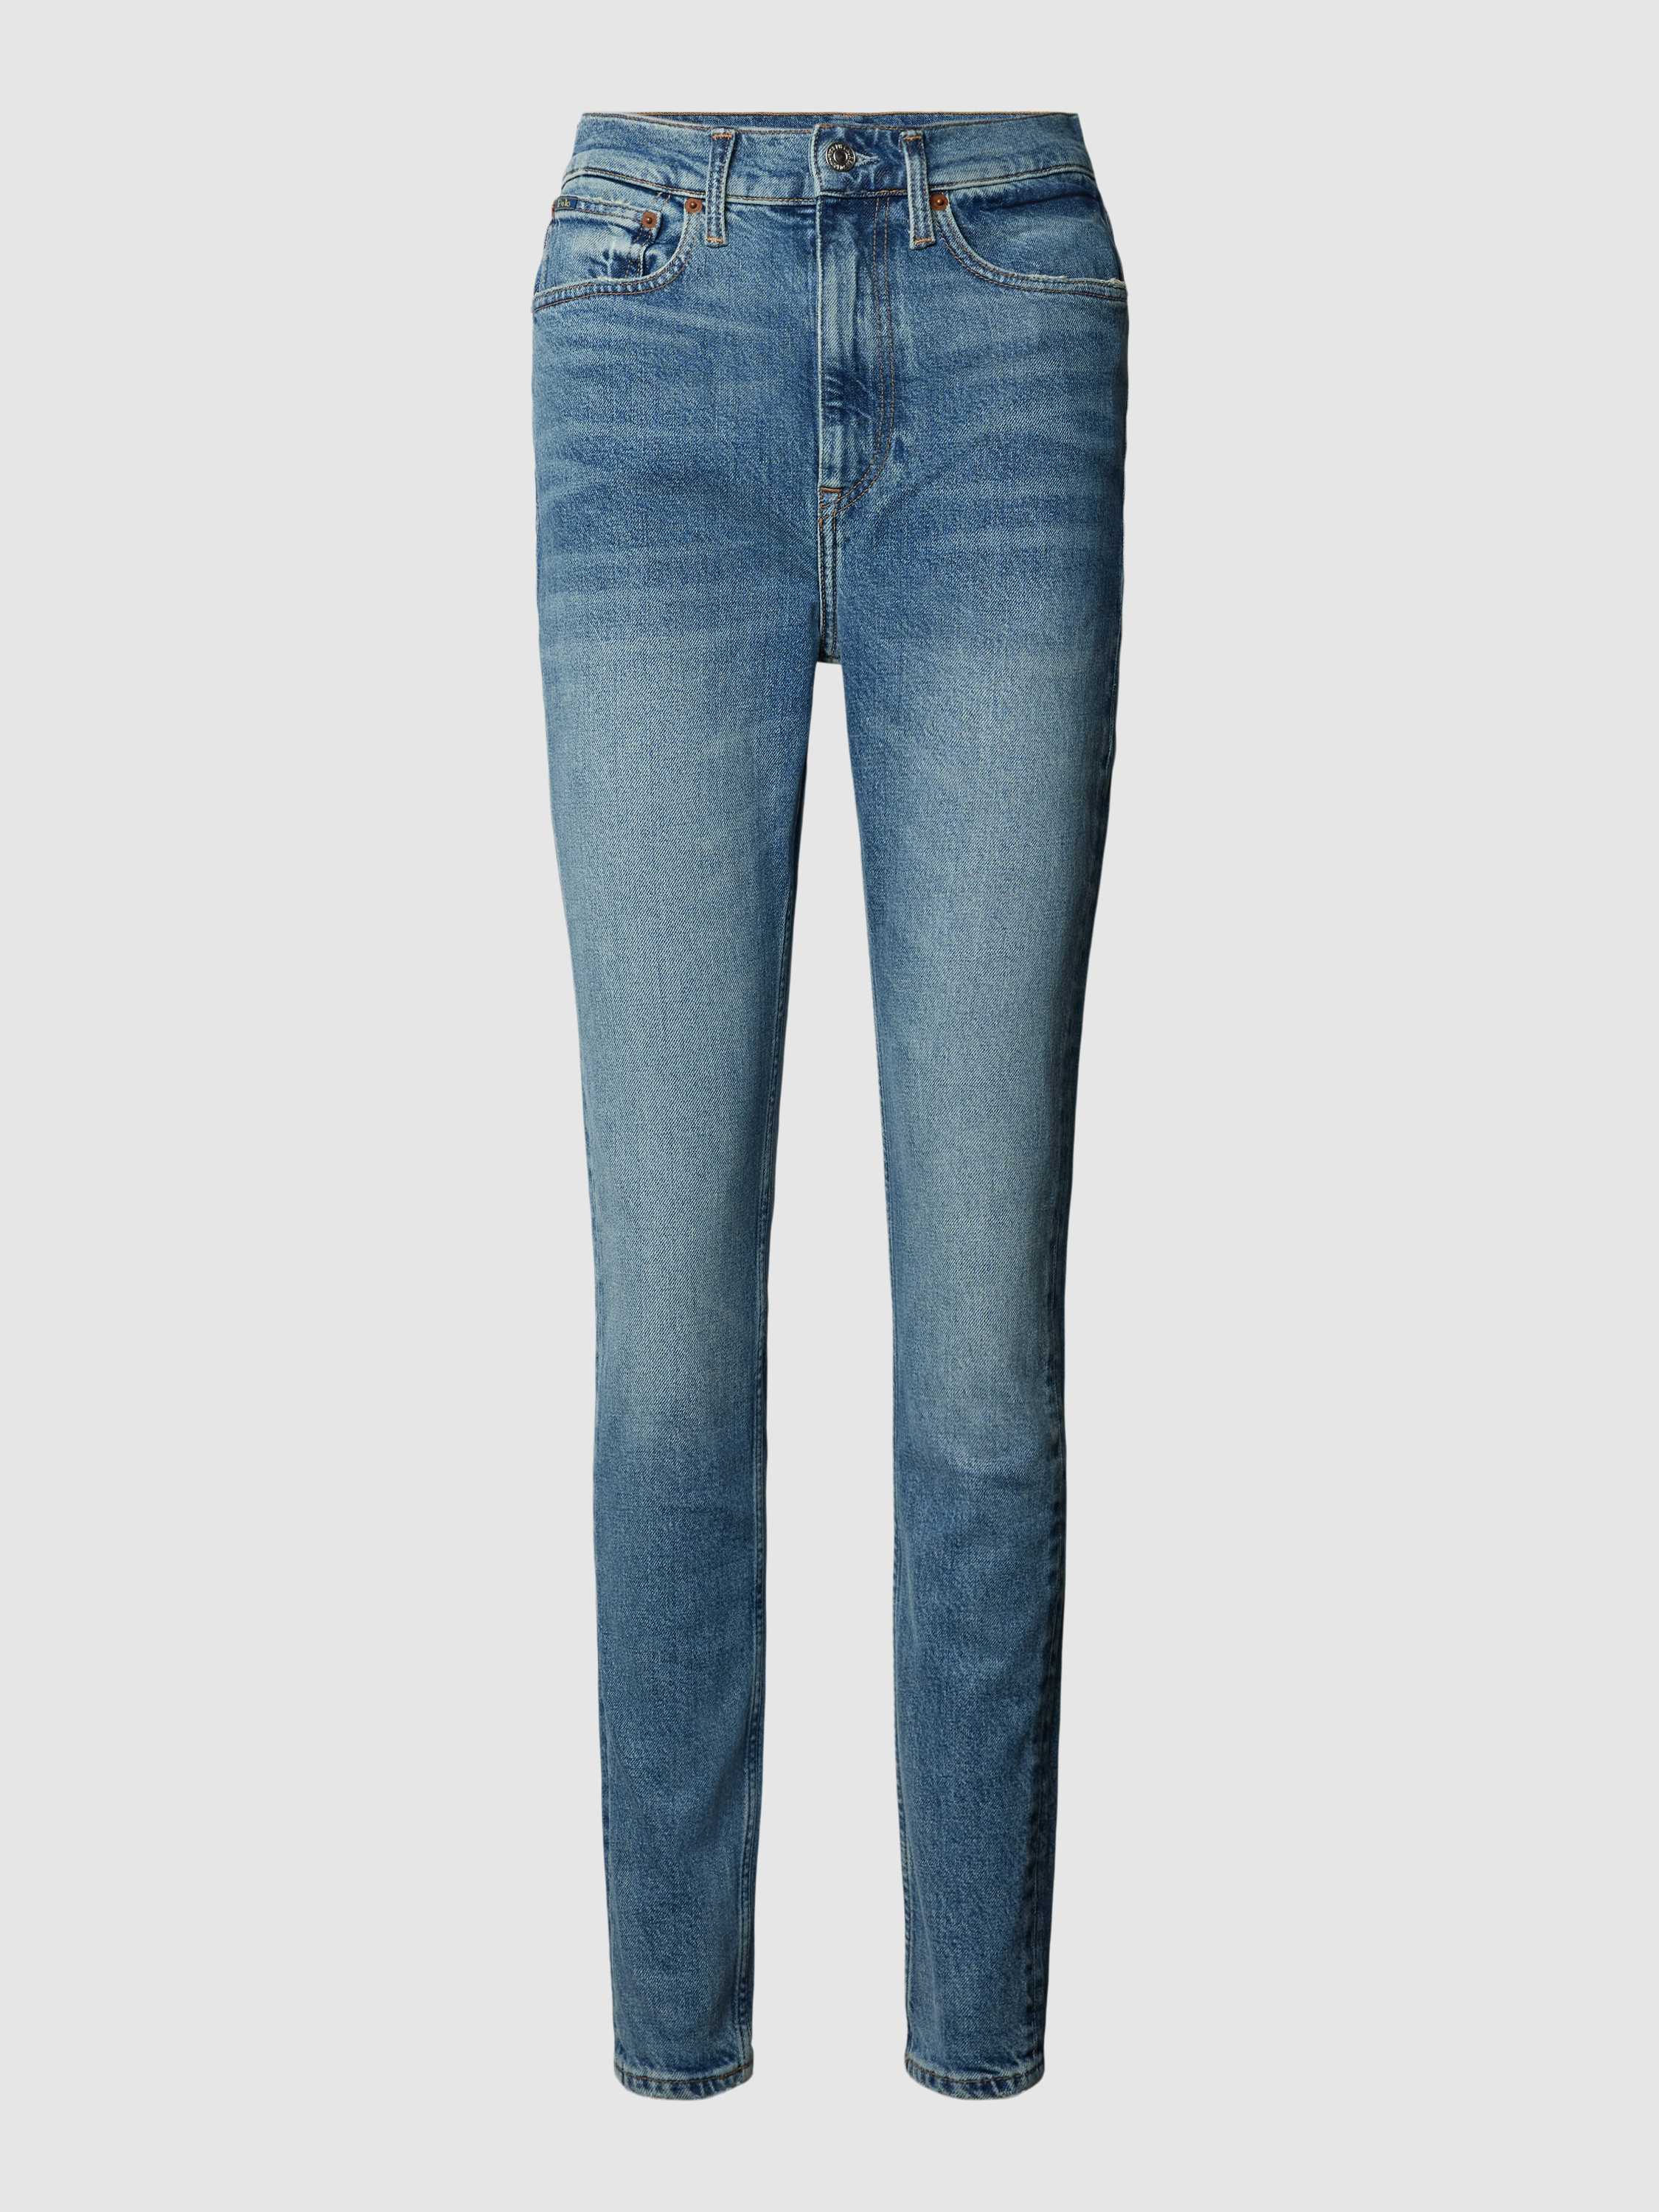 High Waist Slim Fit Jeans im 5-Pocket-Design